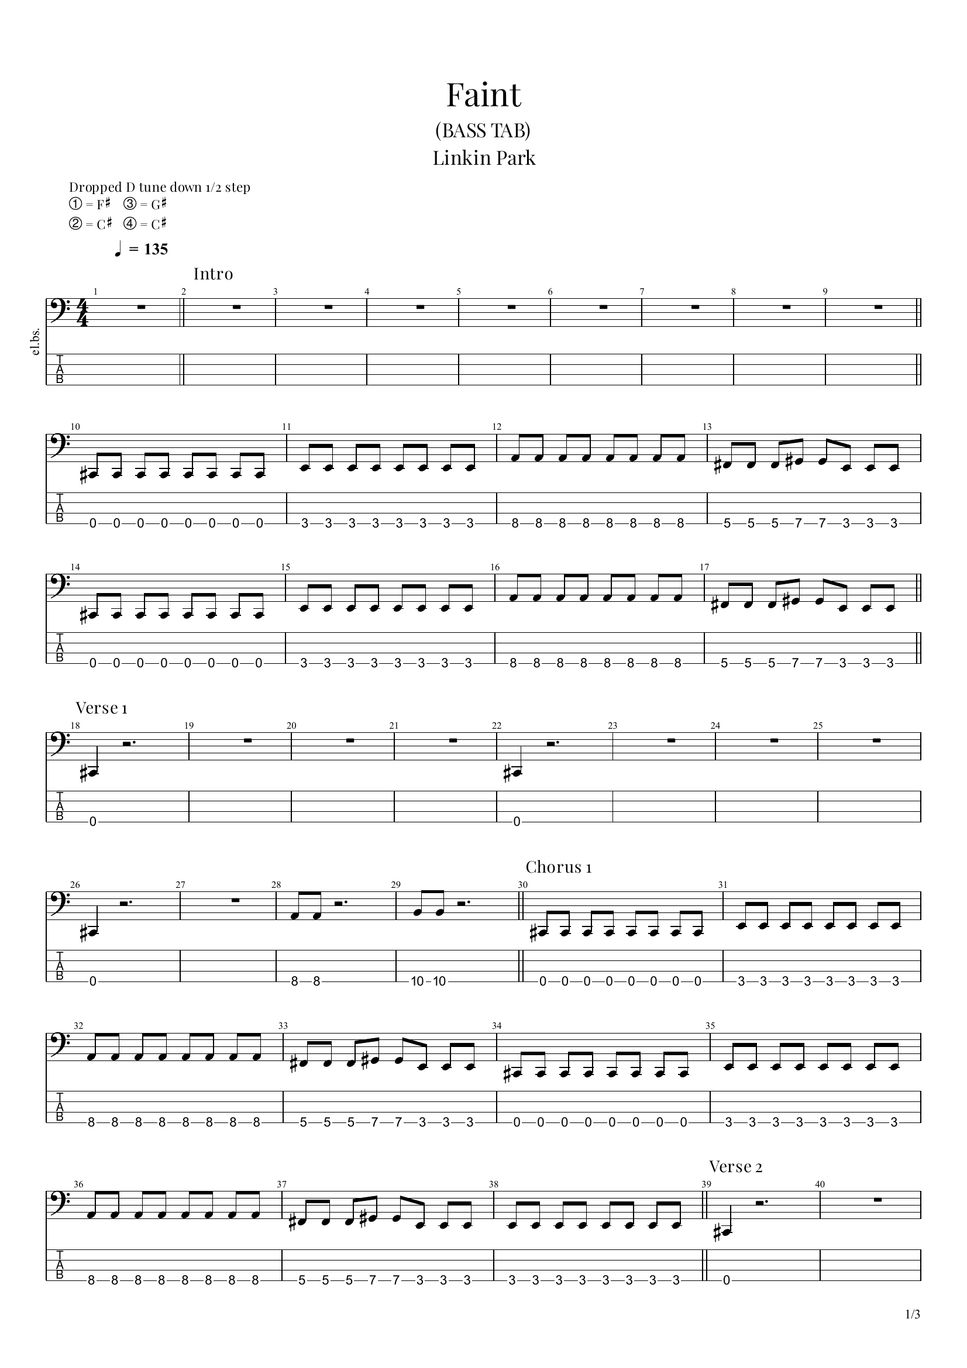 Linkin Park - Faint (BASS TAB + Guitar Pro) by Um Hanwool